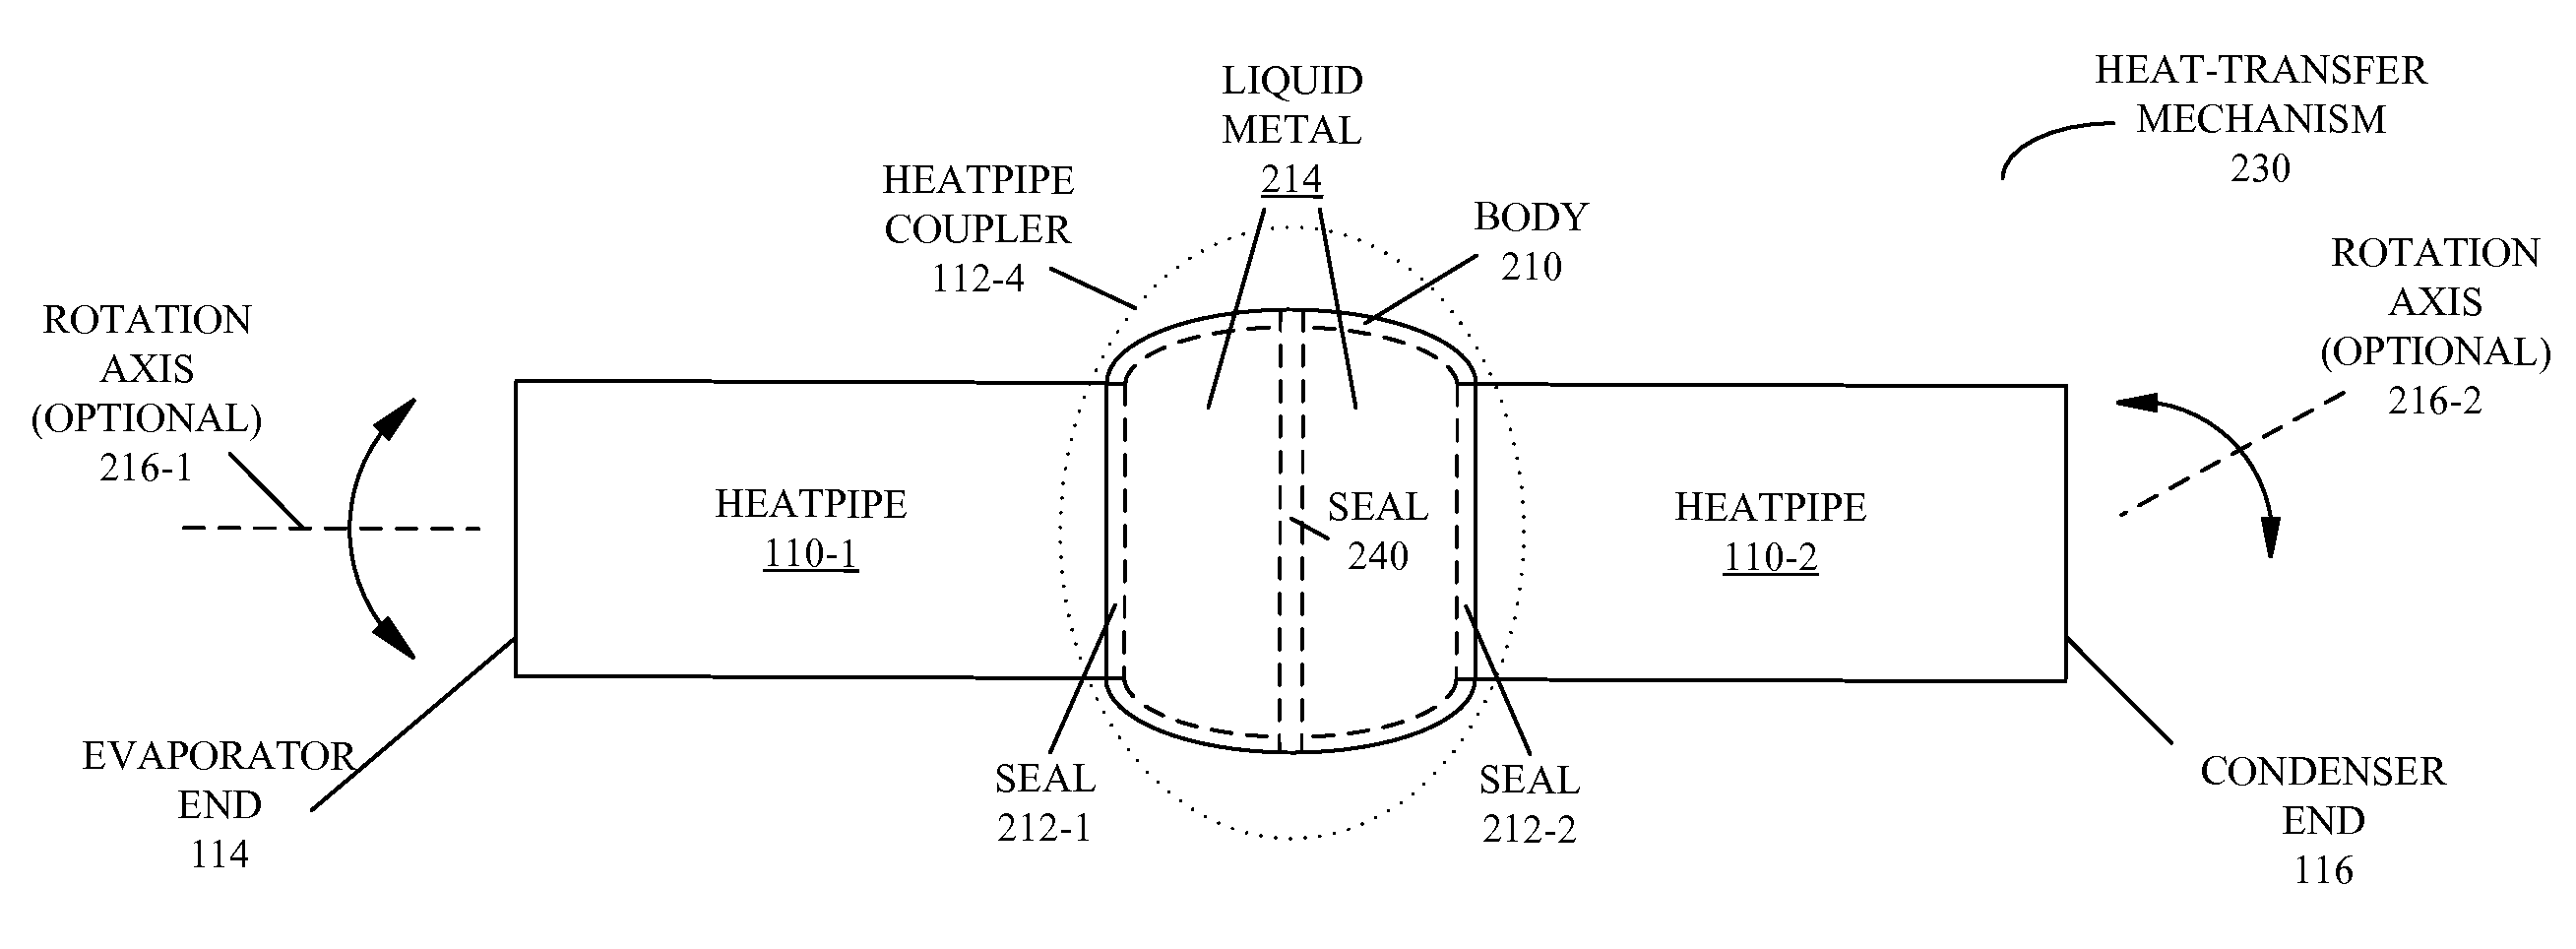 Heat-transfer mechanism including a liquid-metal thermal coupling